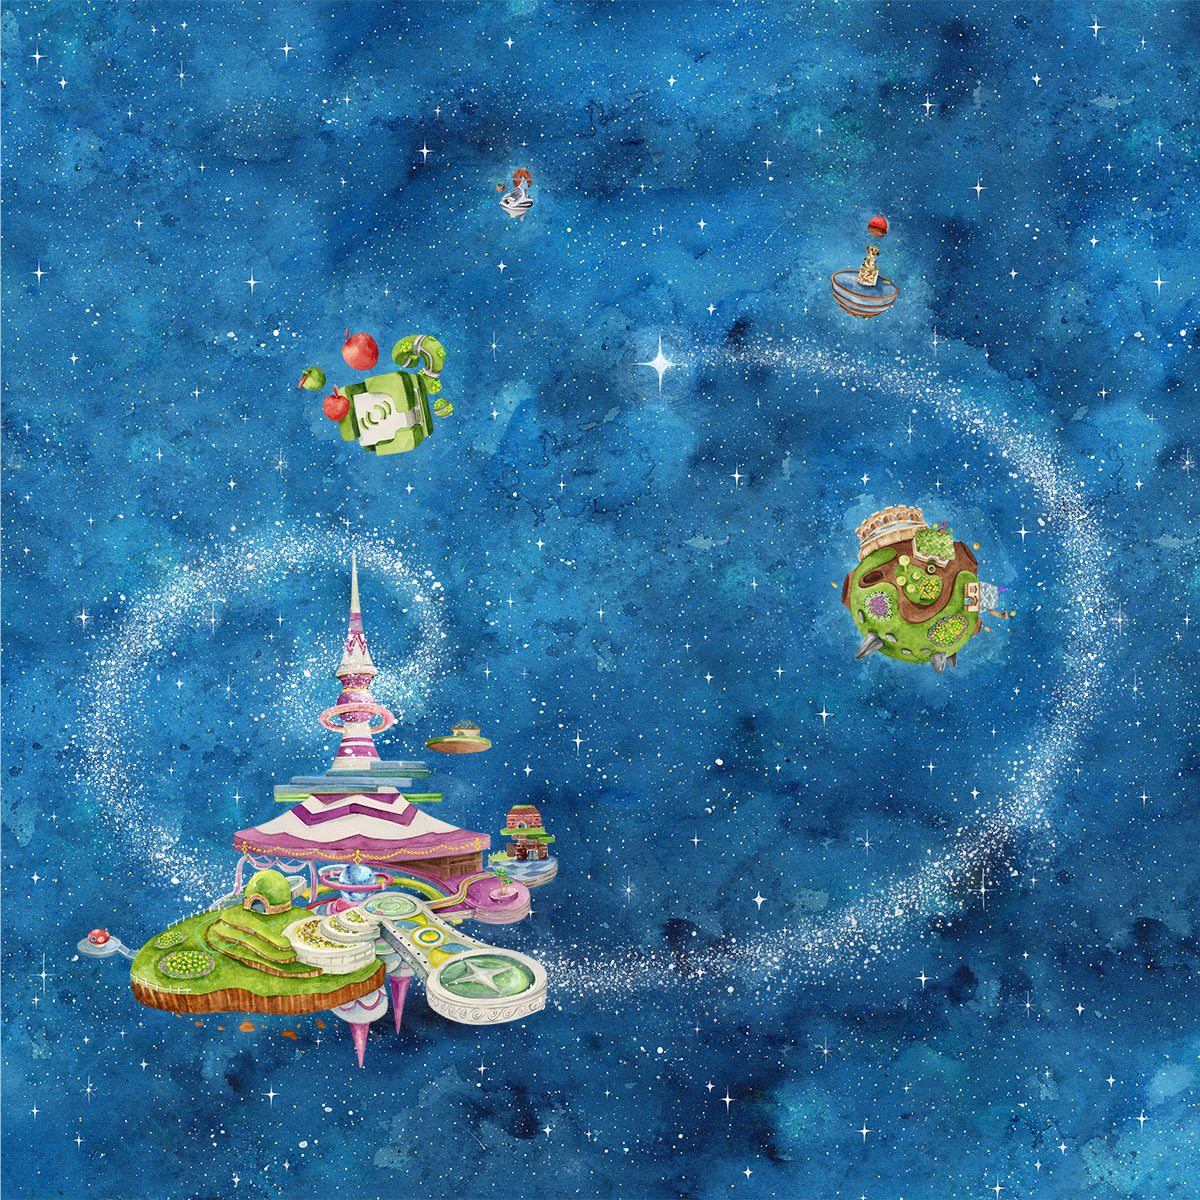 Star Stories (Super Mario Galaxy Cover) - AJ DiSpirito